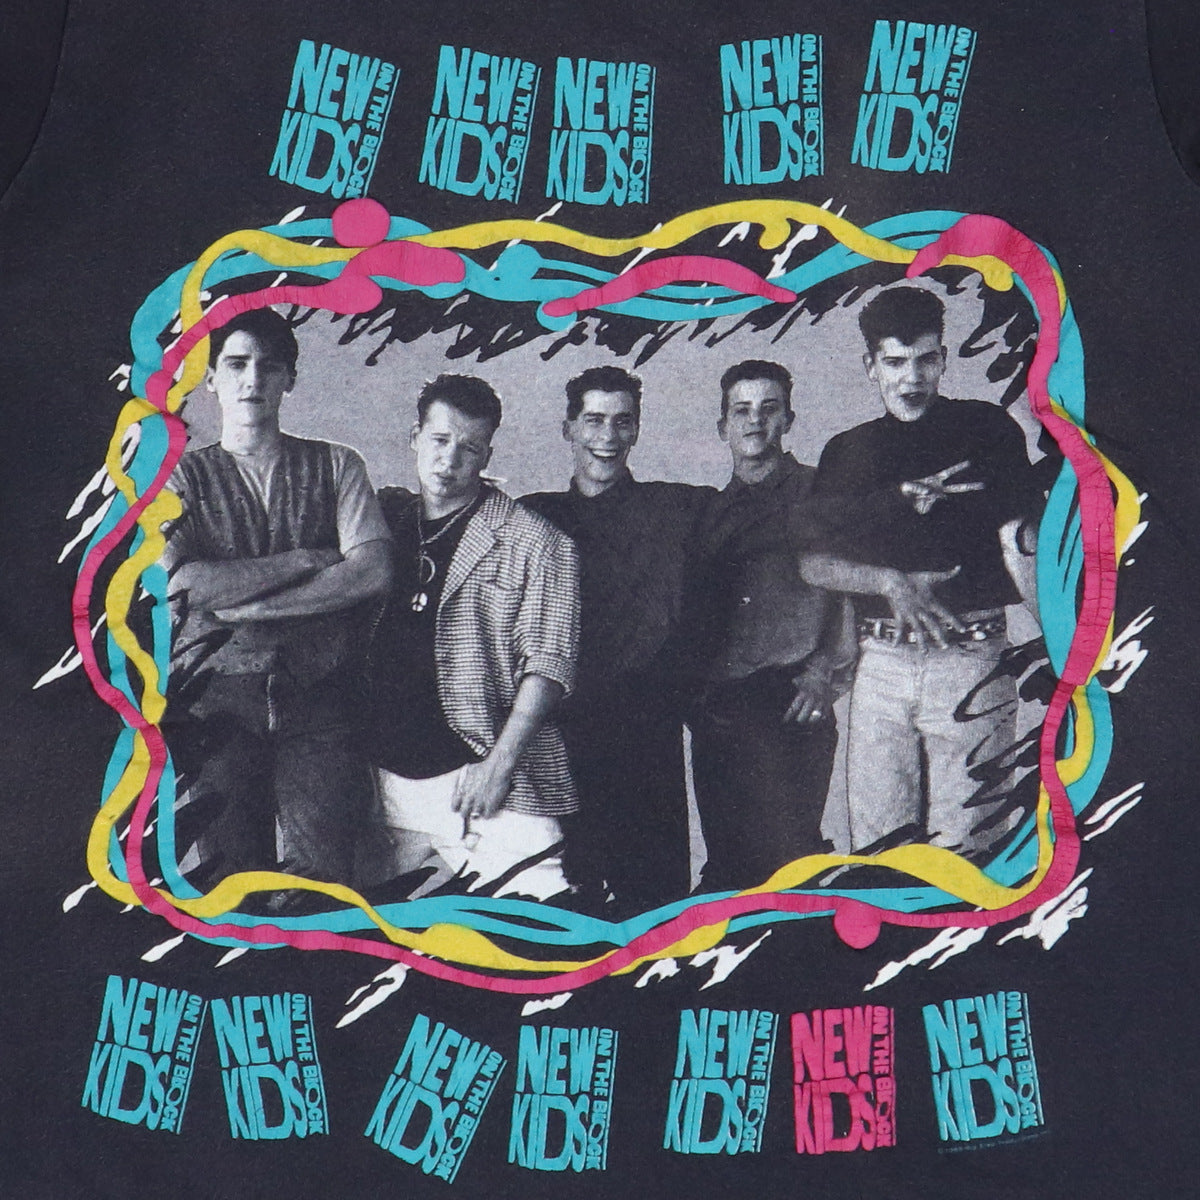 1989 New Kids On The Block Tour Shirt